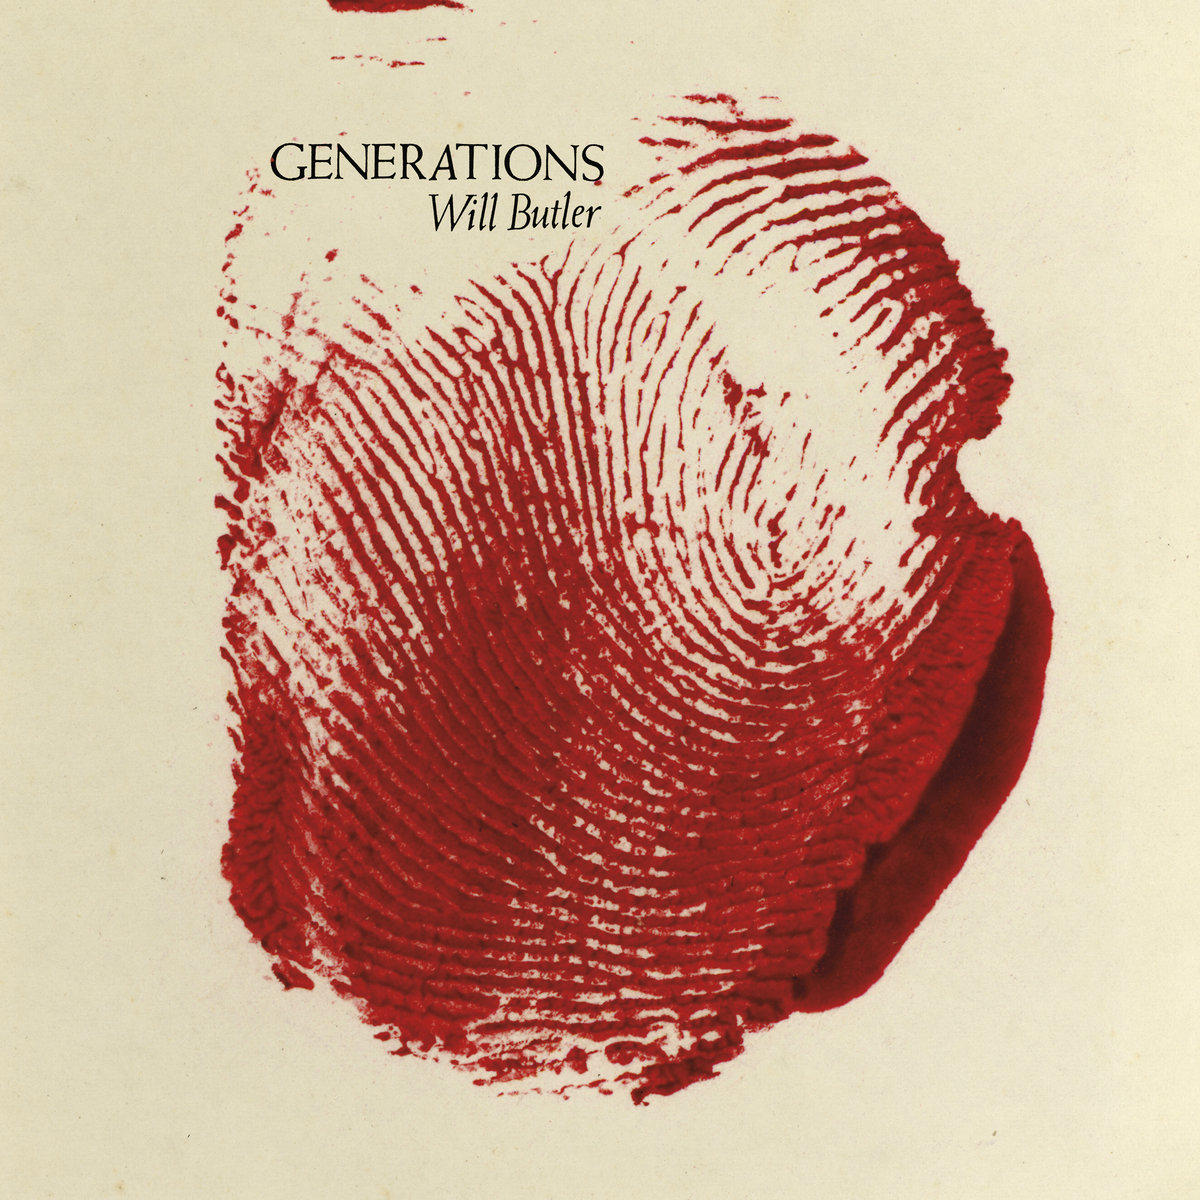 Generations: Un disco donde Will Butler nos invita a reflexionar a través de la crítica